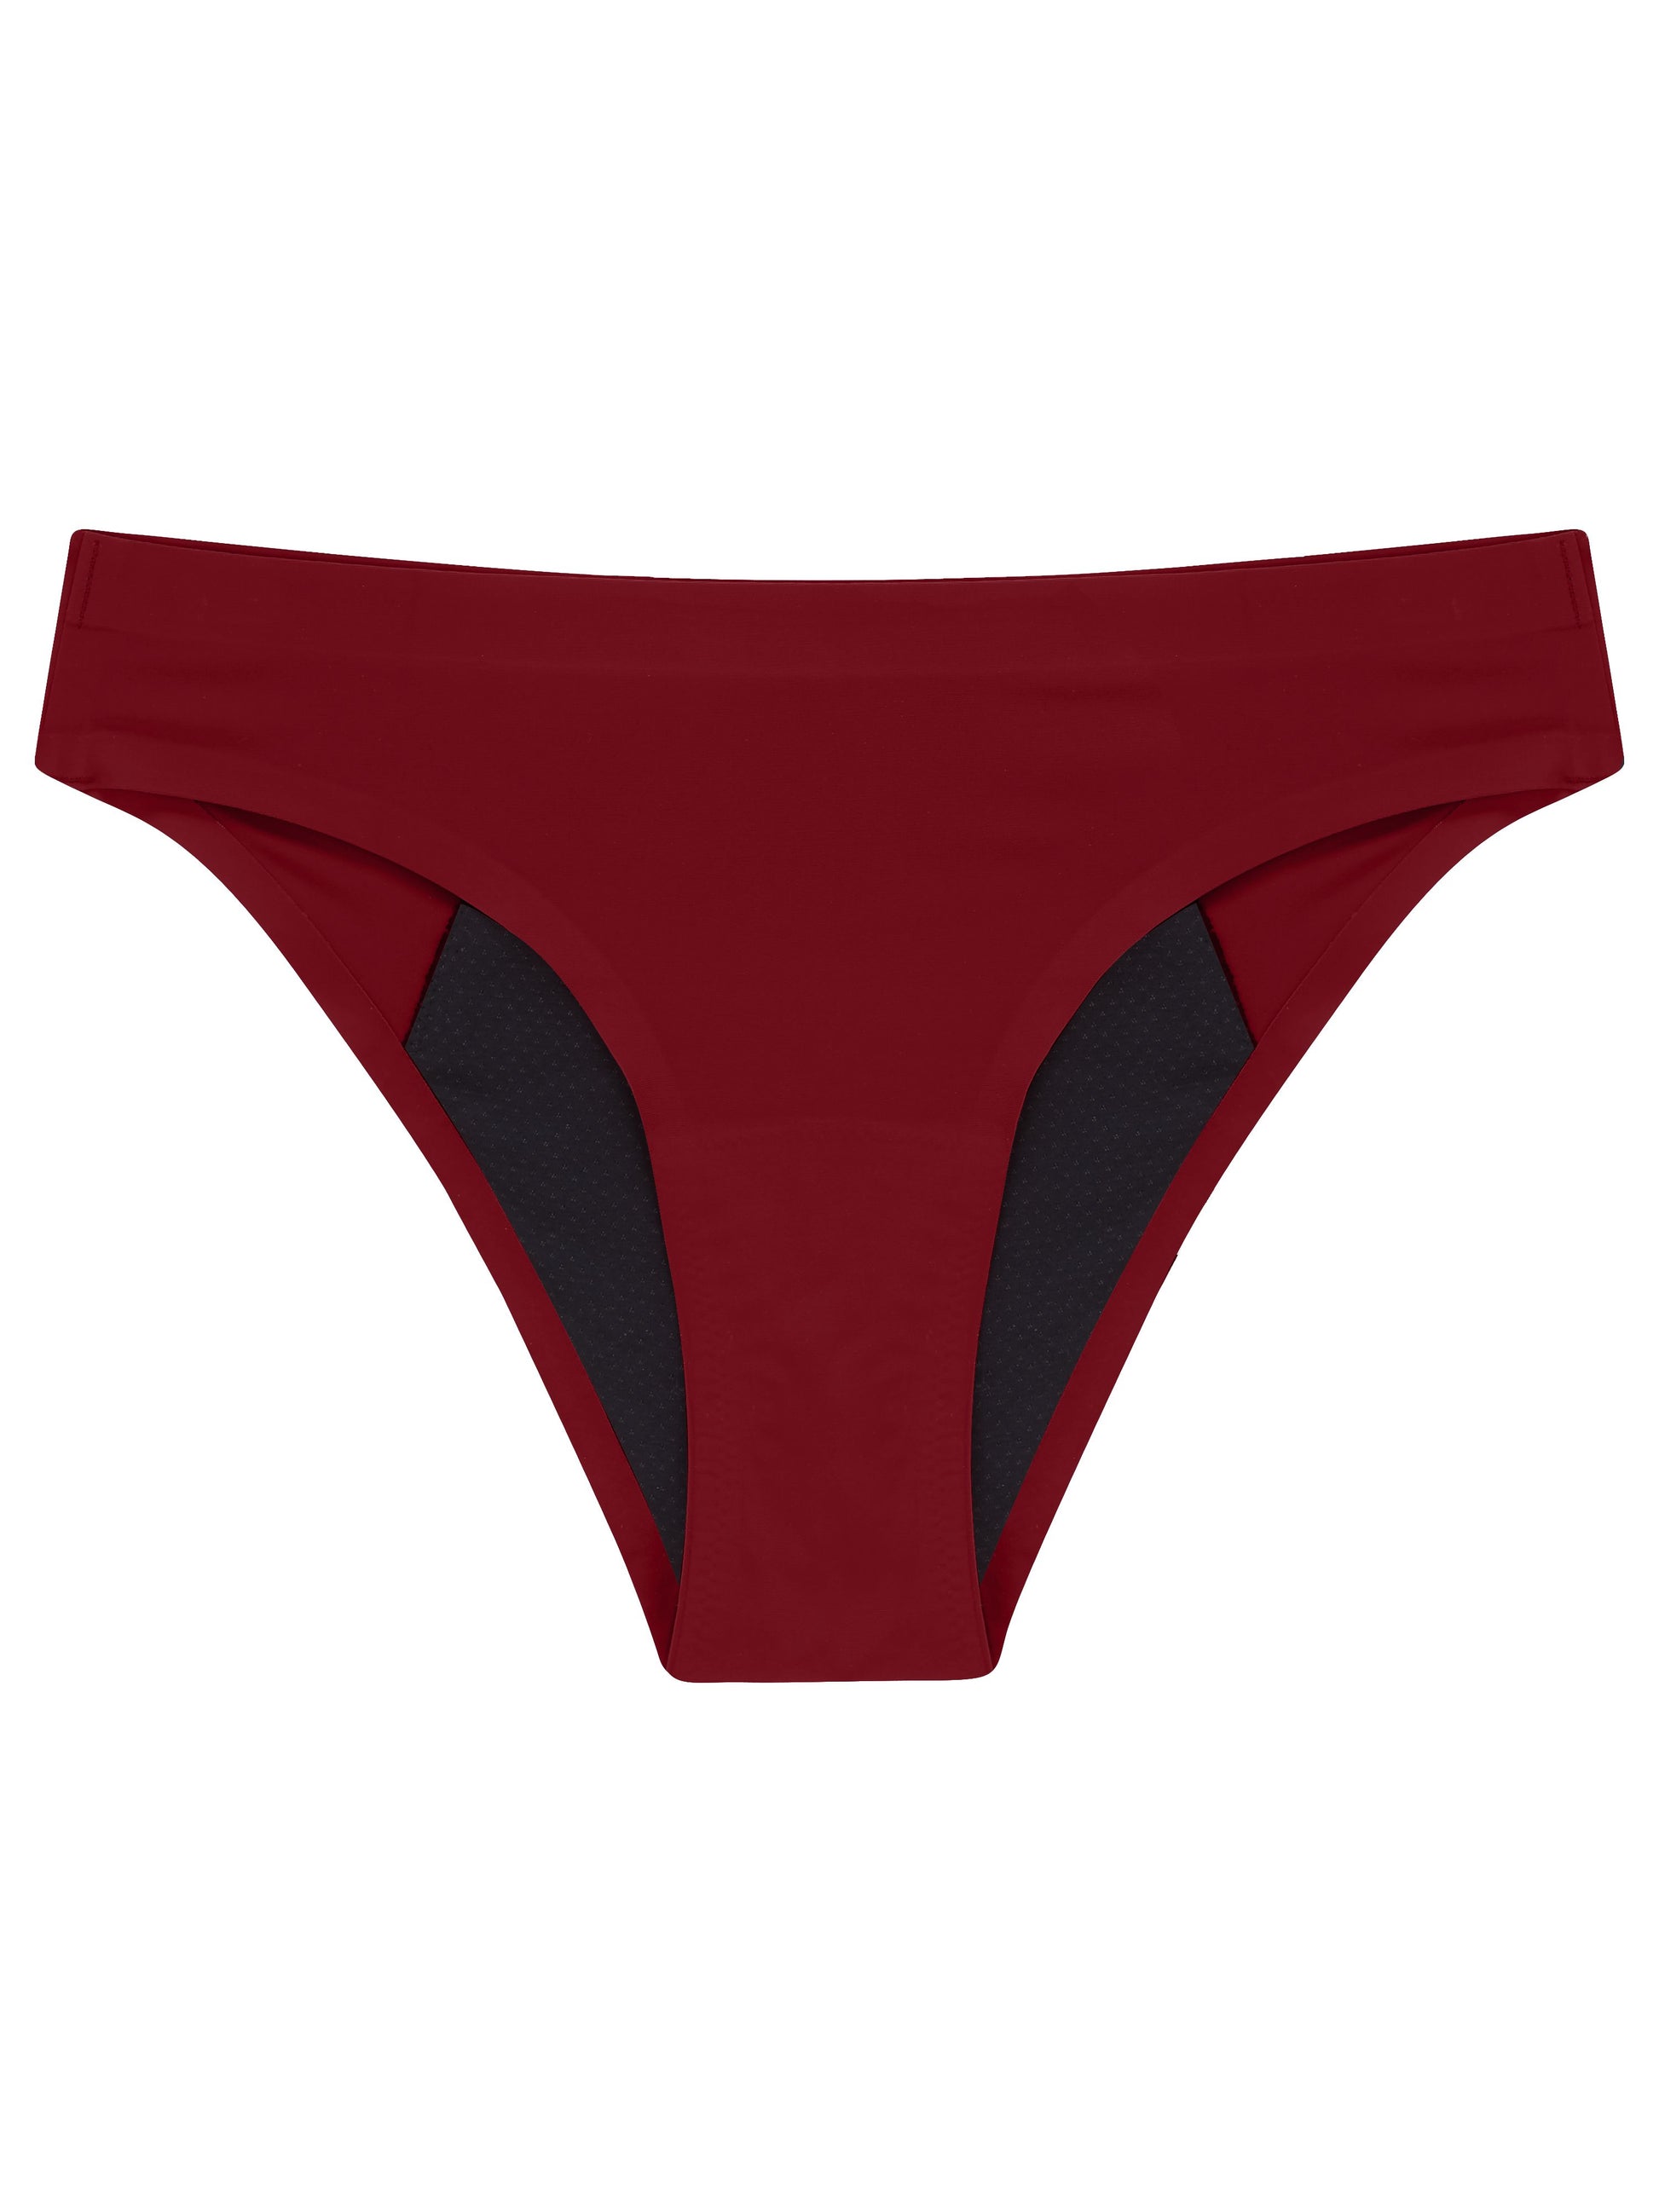 Imaara Feminine Period Underwear Inclusive Knickers. Product Jamuna Rhubarb